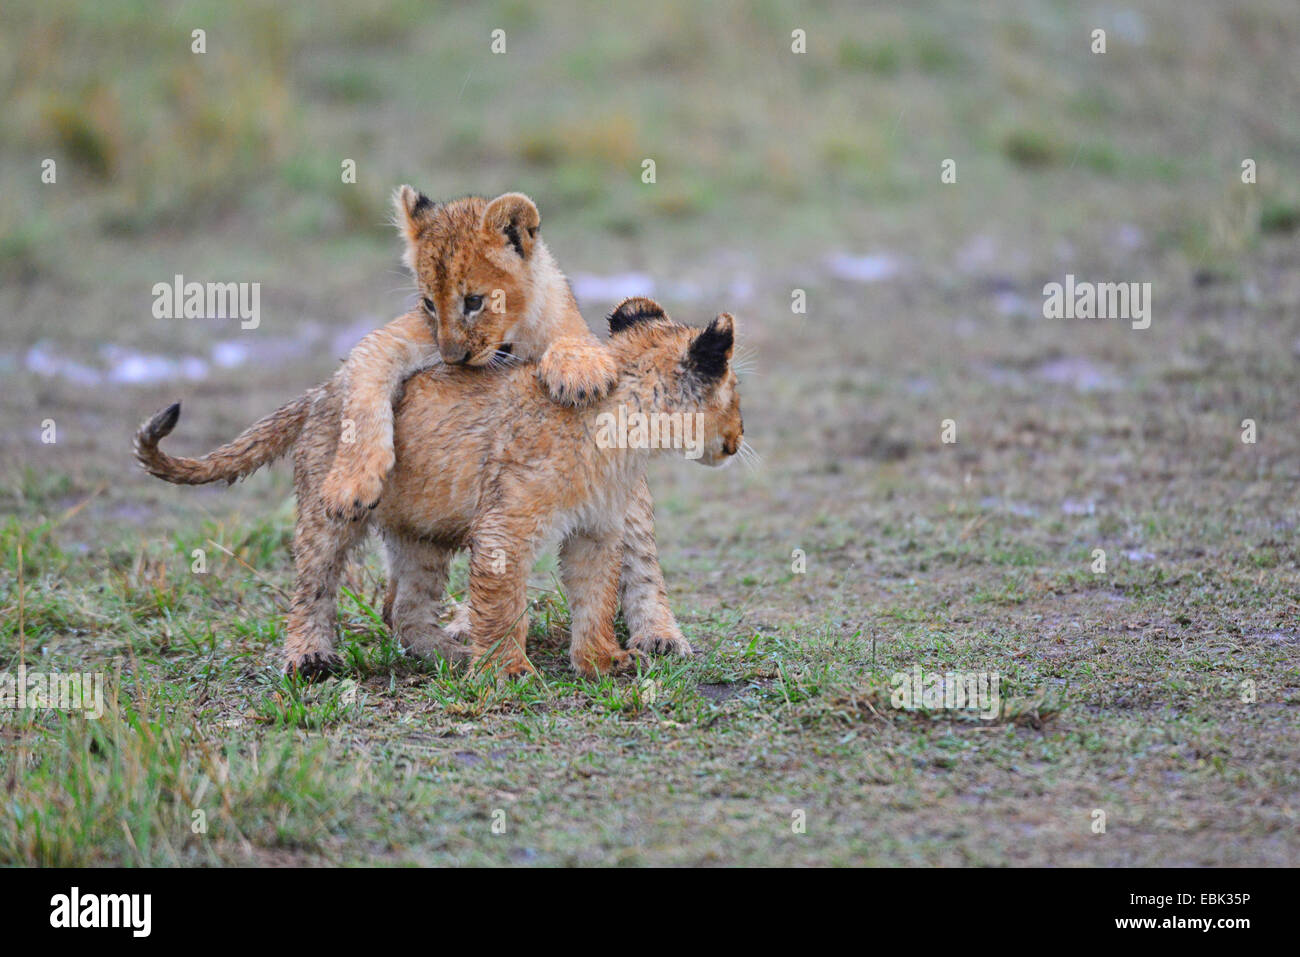 Masai Mara Lion Stock Photo